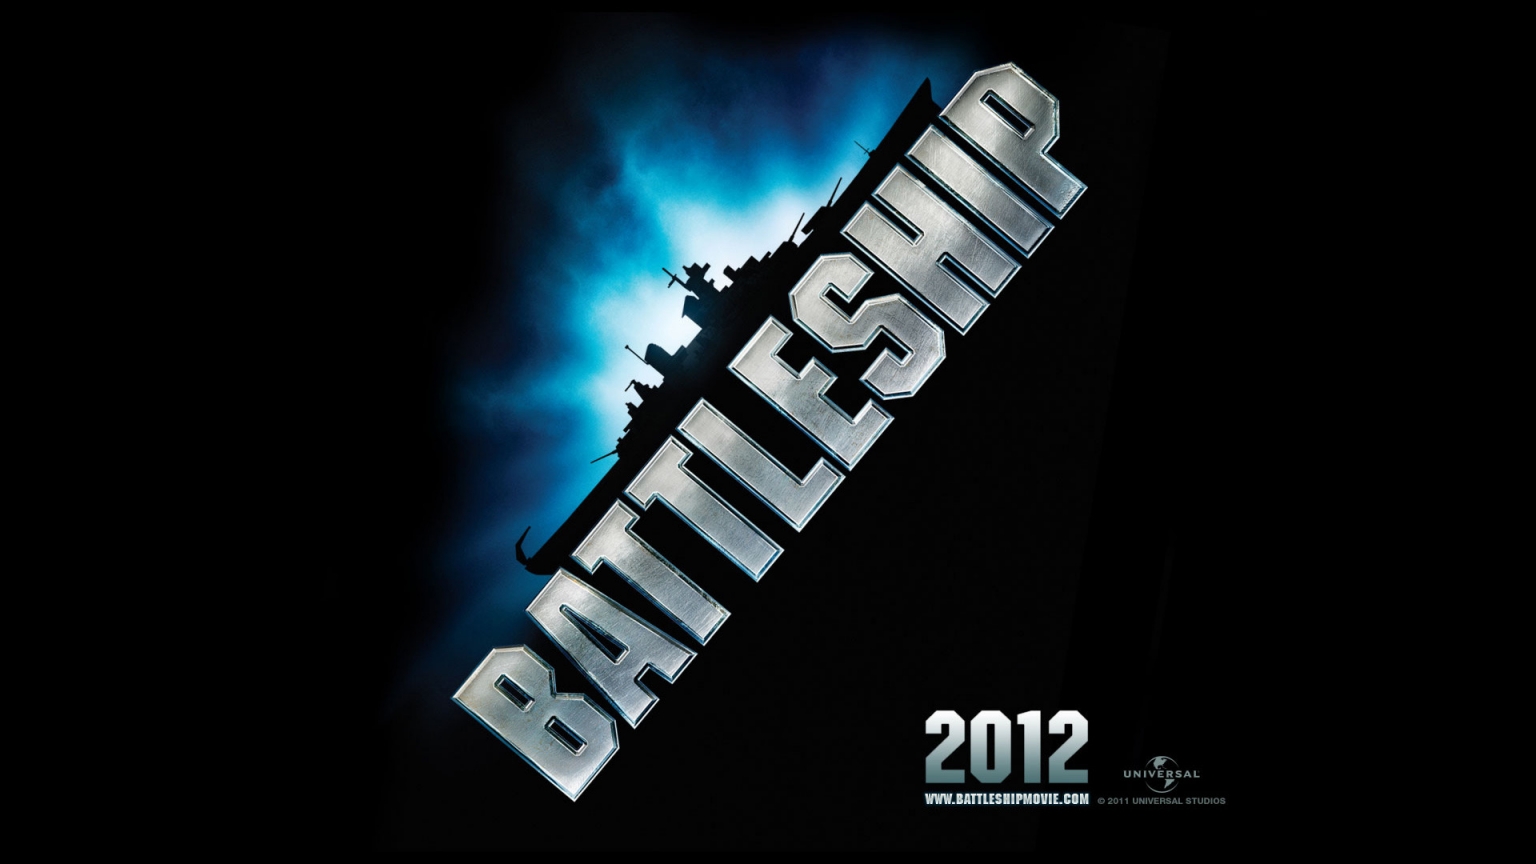 Battleship Movie for 1536 x 864 HDTV resolution